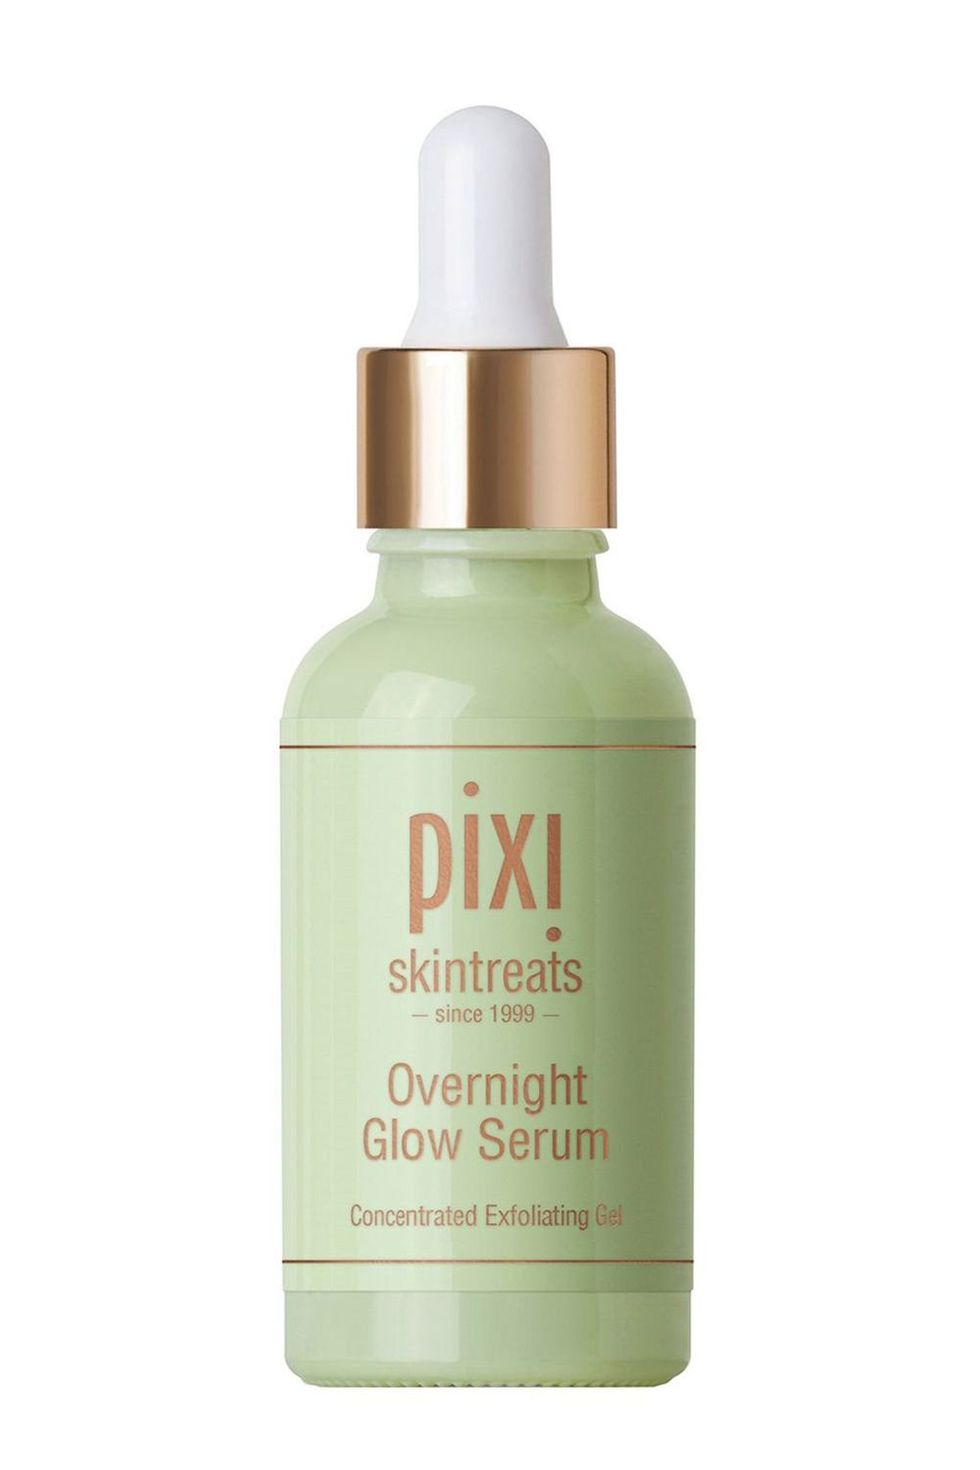 Pixi Overnight Glow Serum Concentrated Exfoliating Gel